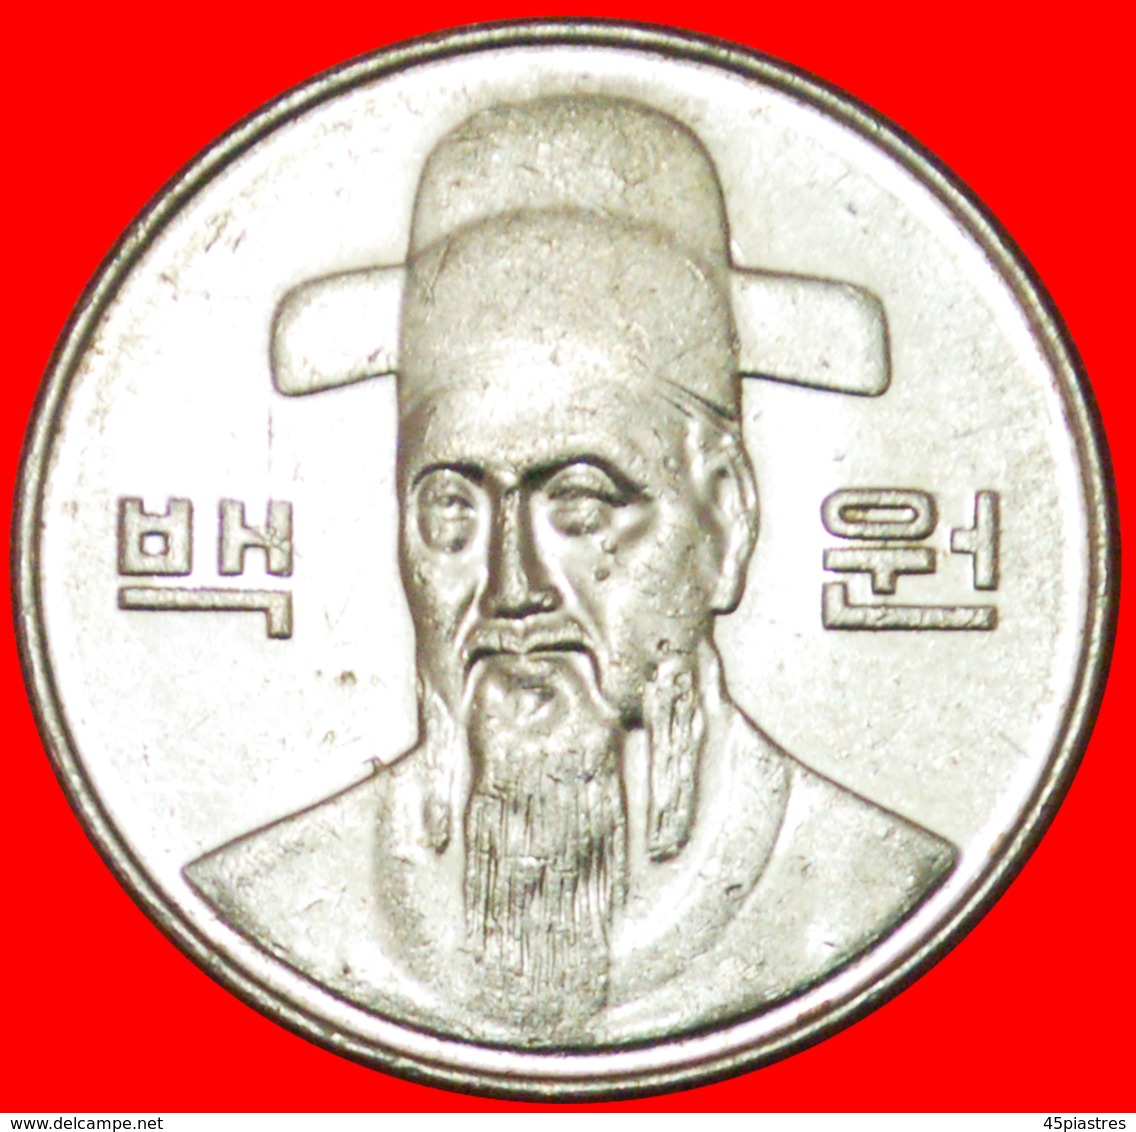 # ADMIRAL (1545-1598): SOUTH KOREA ★ 100 WON 2006 MINT LUSTER! LOW START ★ NO RESERVE! - Korea, South